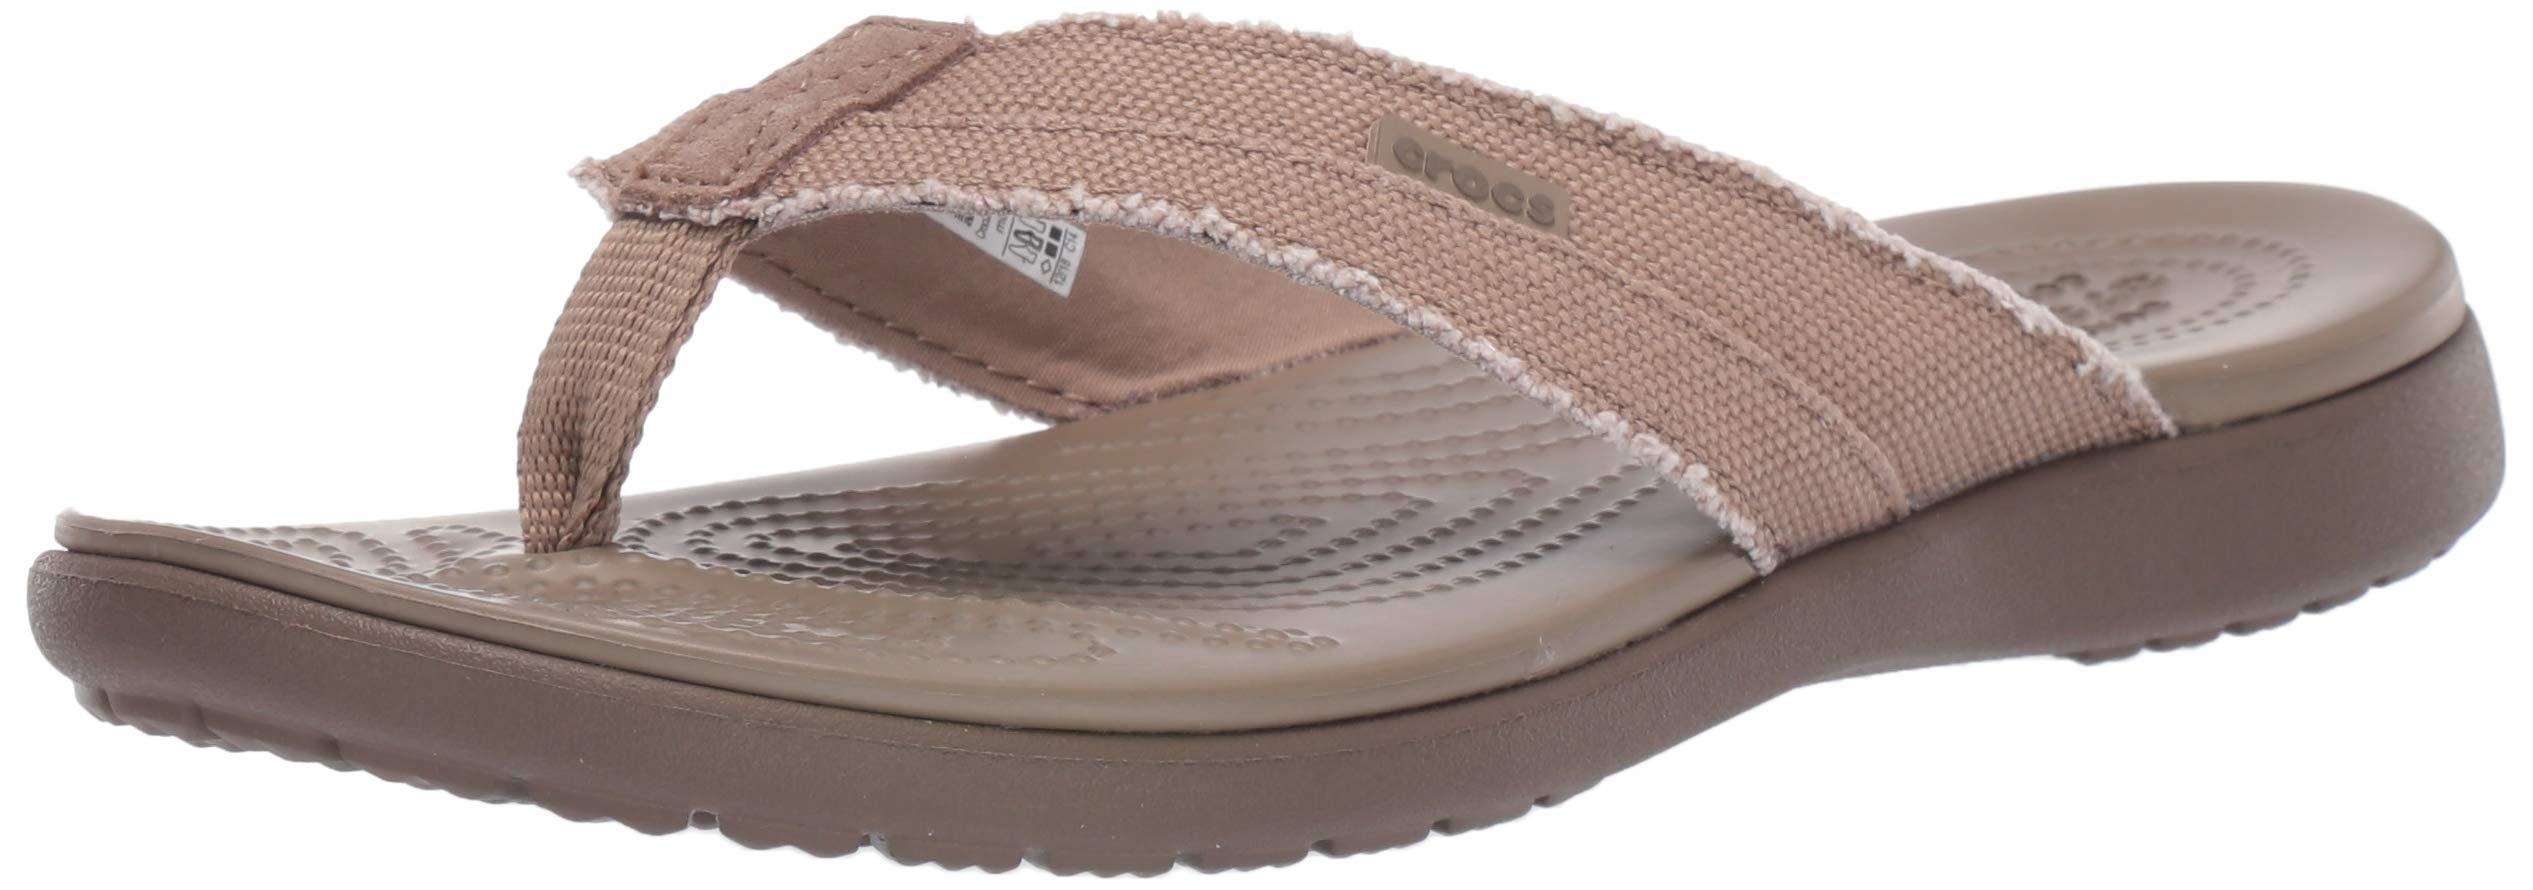 Crocs™ Santa Cruz Canvas Flip Flop | Casual Lightweight Shoe in Khaki ...